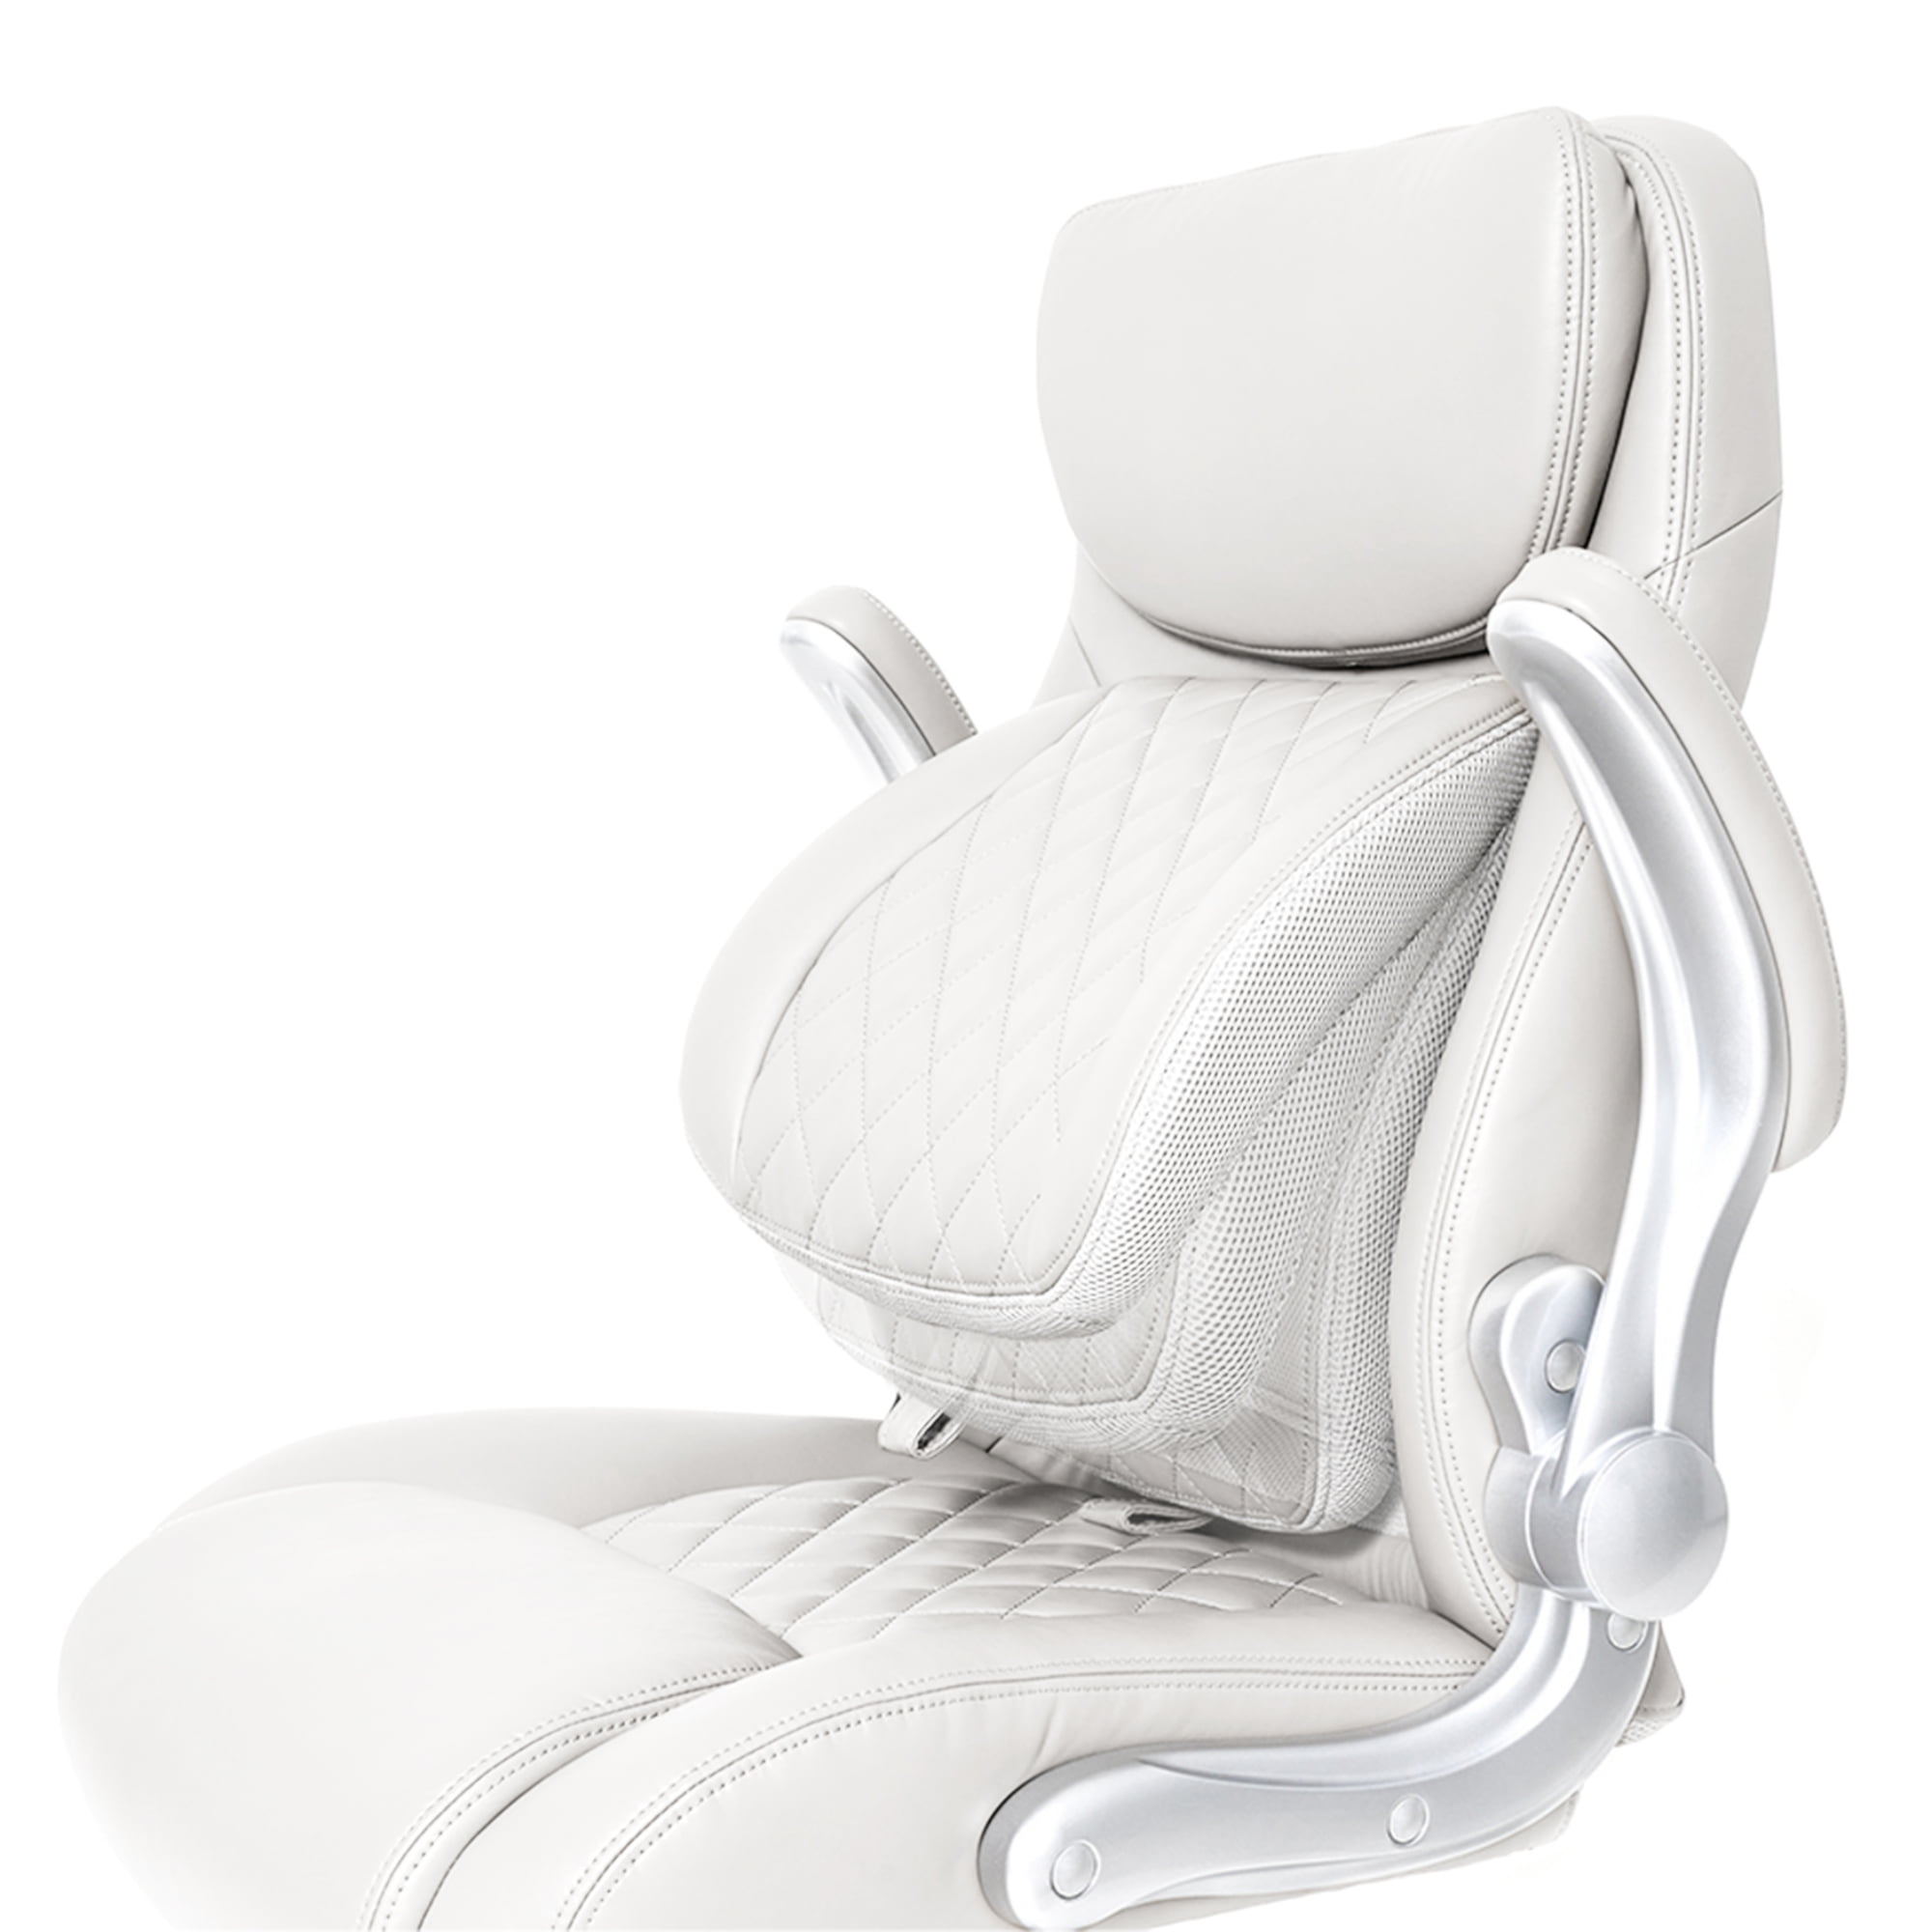 Nouhaus Posture Ergonomic PU Leather Office Chair Black NHO-0004BL - Best  Buy